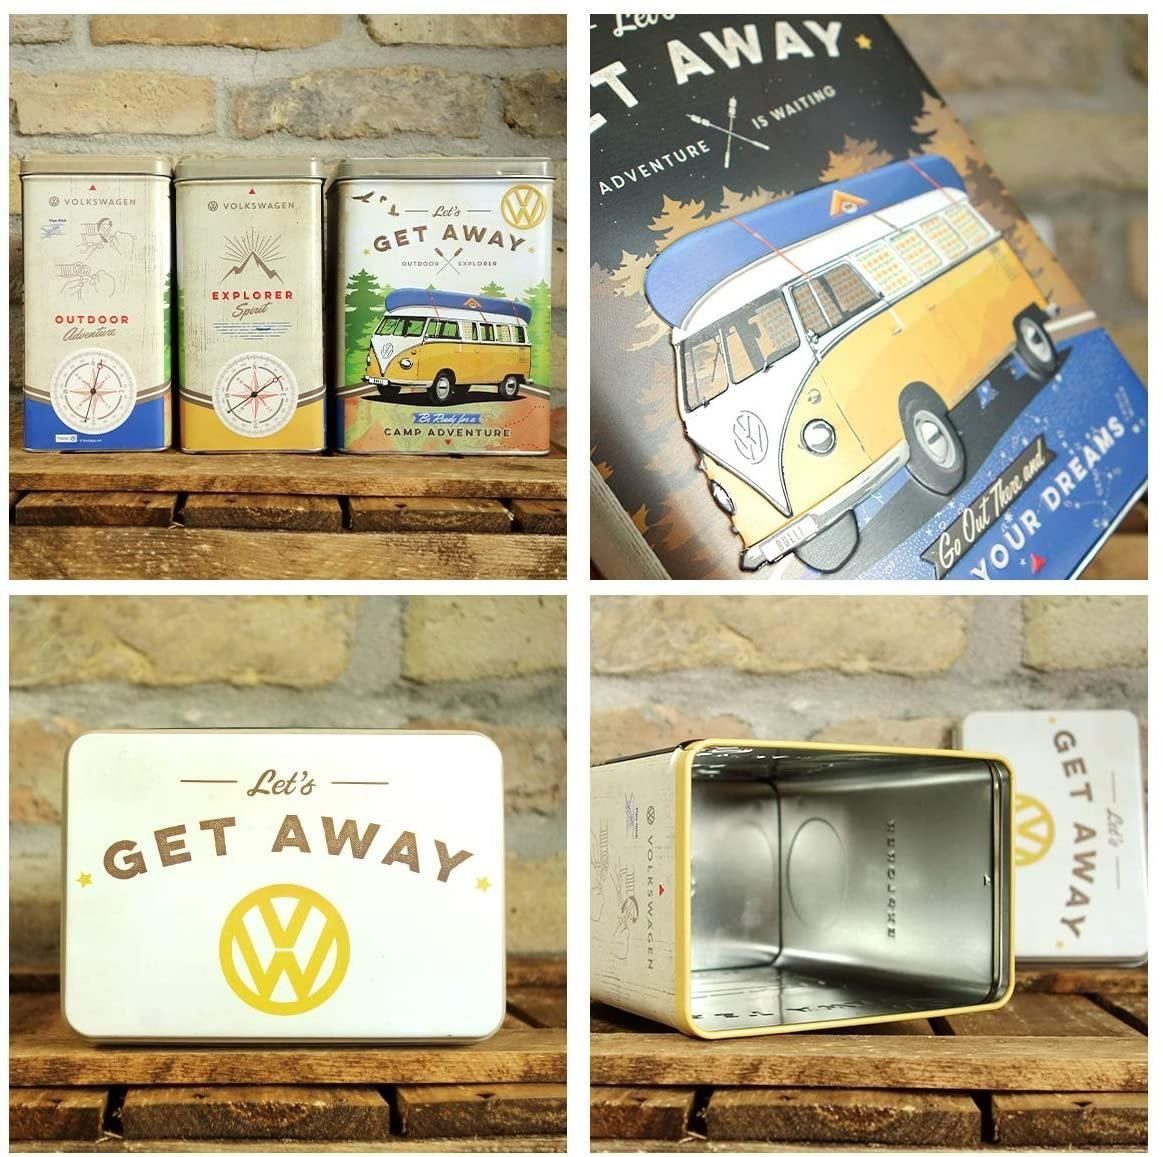 VW Get Bulli Nostalgic-Art Kaffeedose Away - Vorratsdose Blechdose